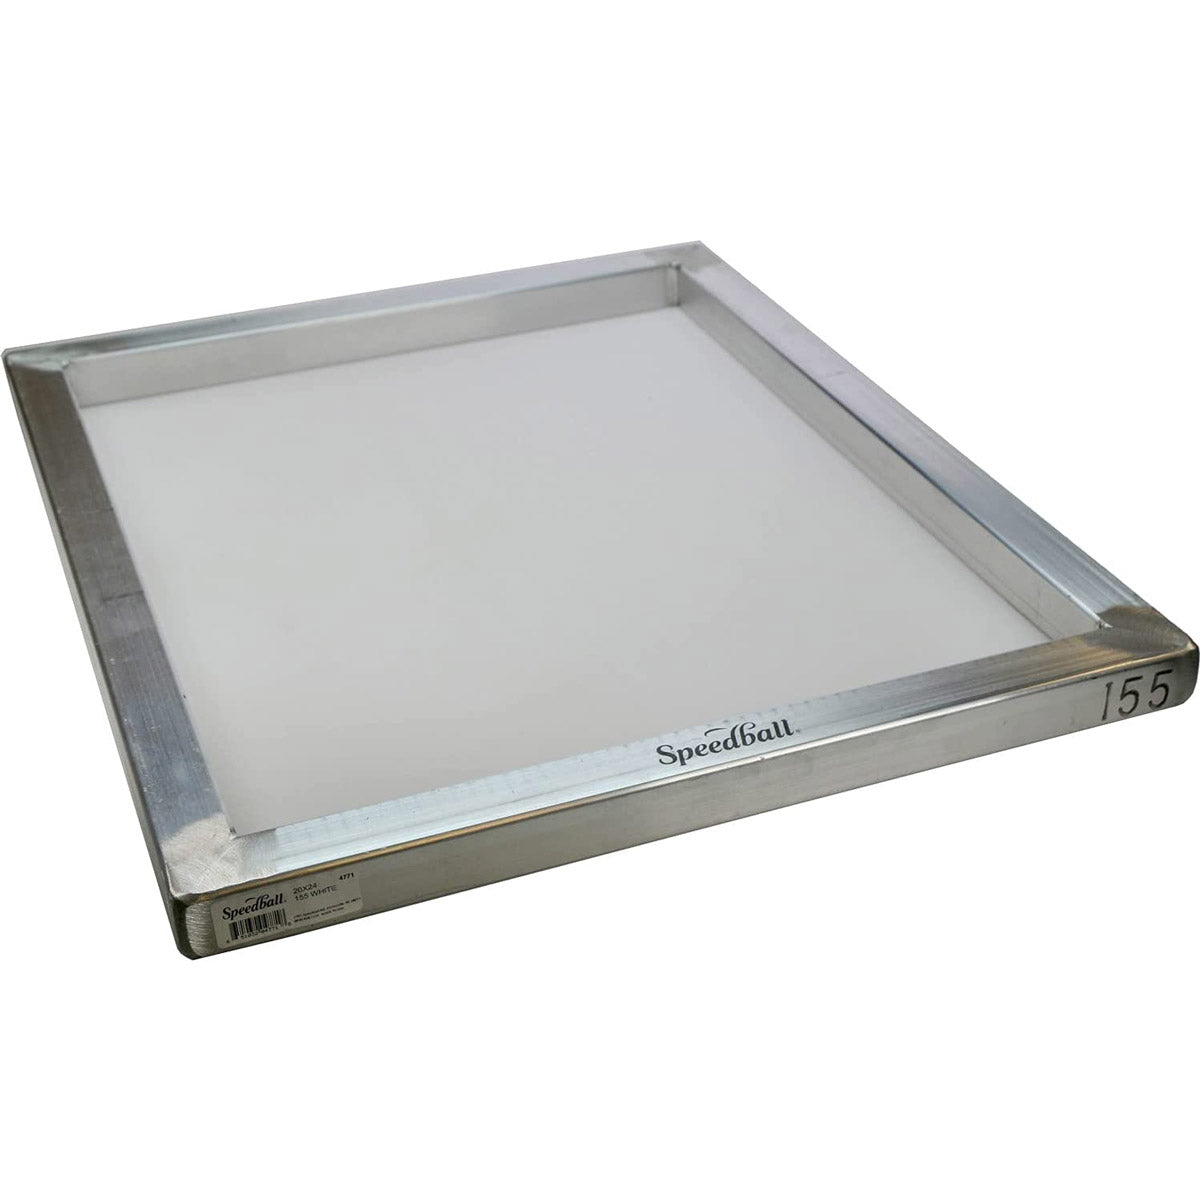 Speedball - 155 Monofilament Aluminium Screen Printing Frame - 20 x 24 inch